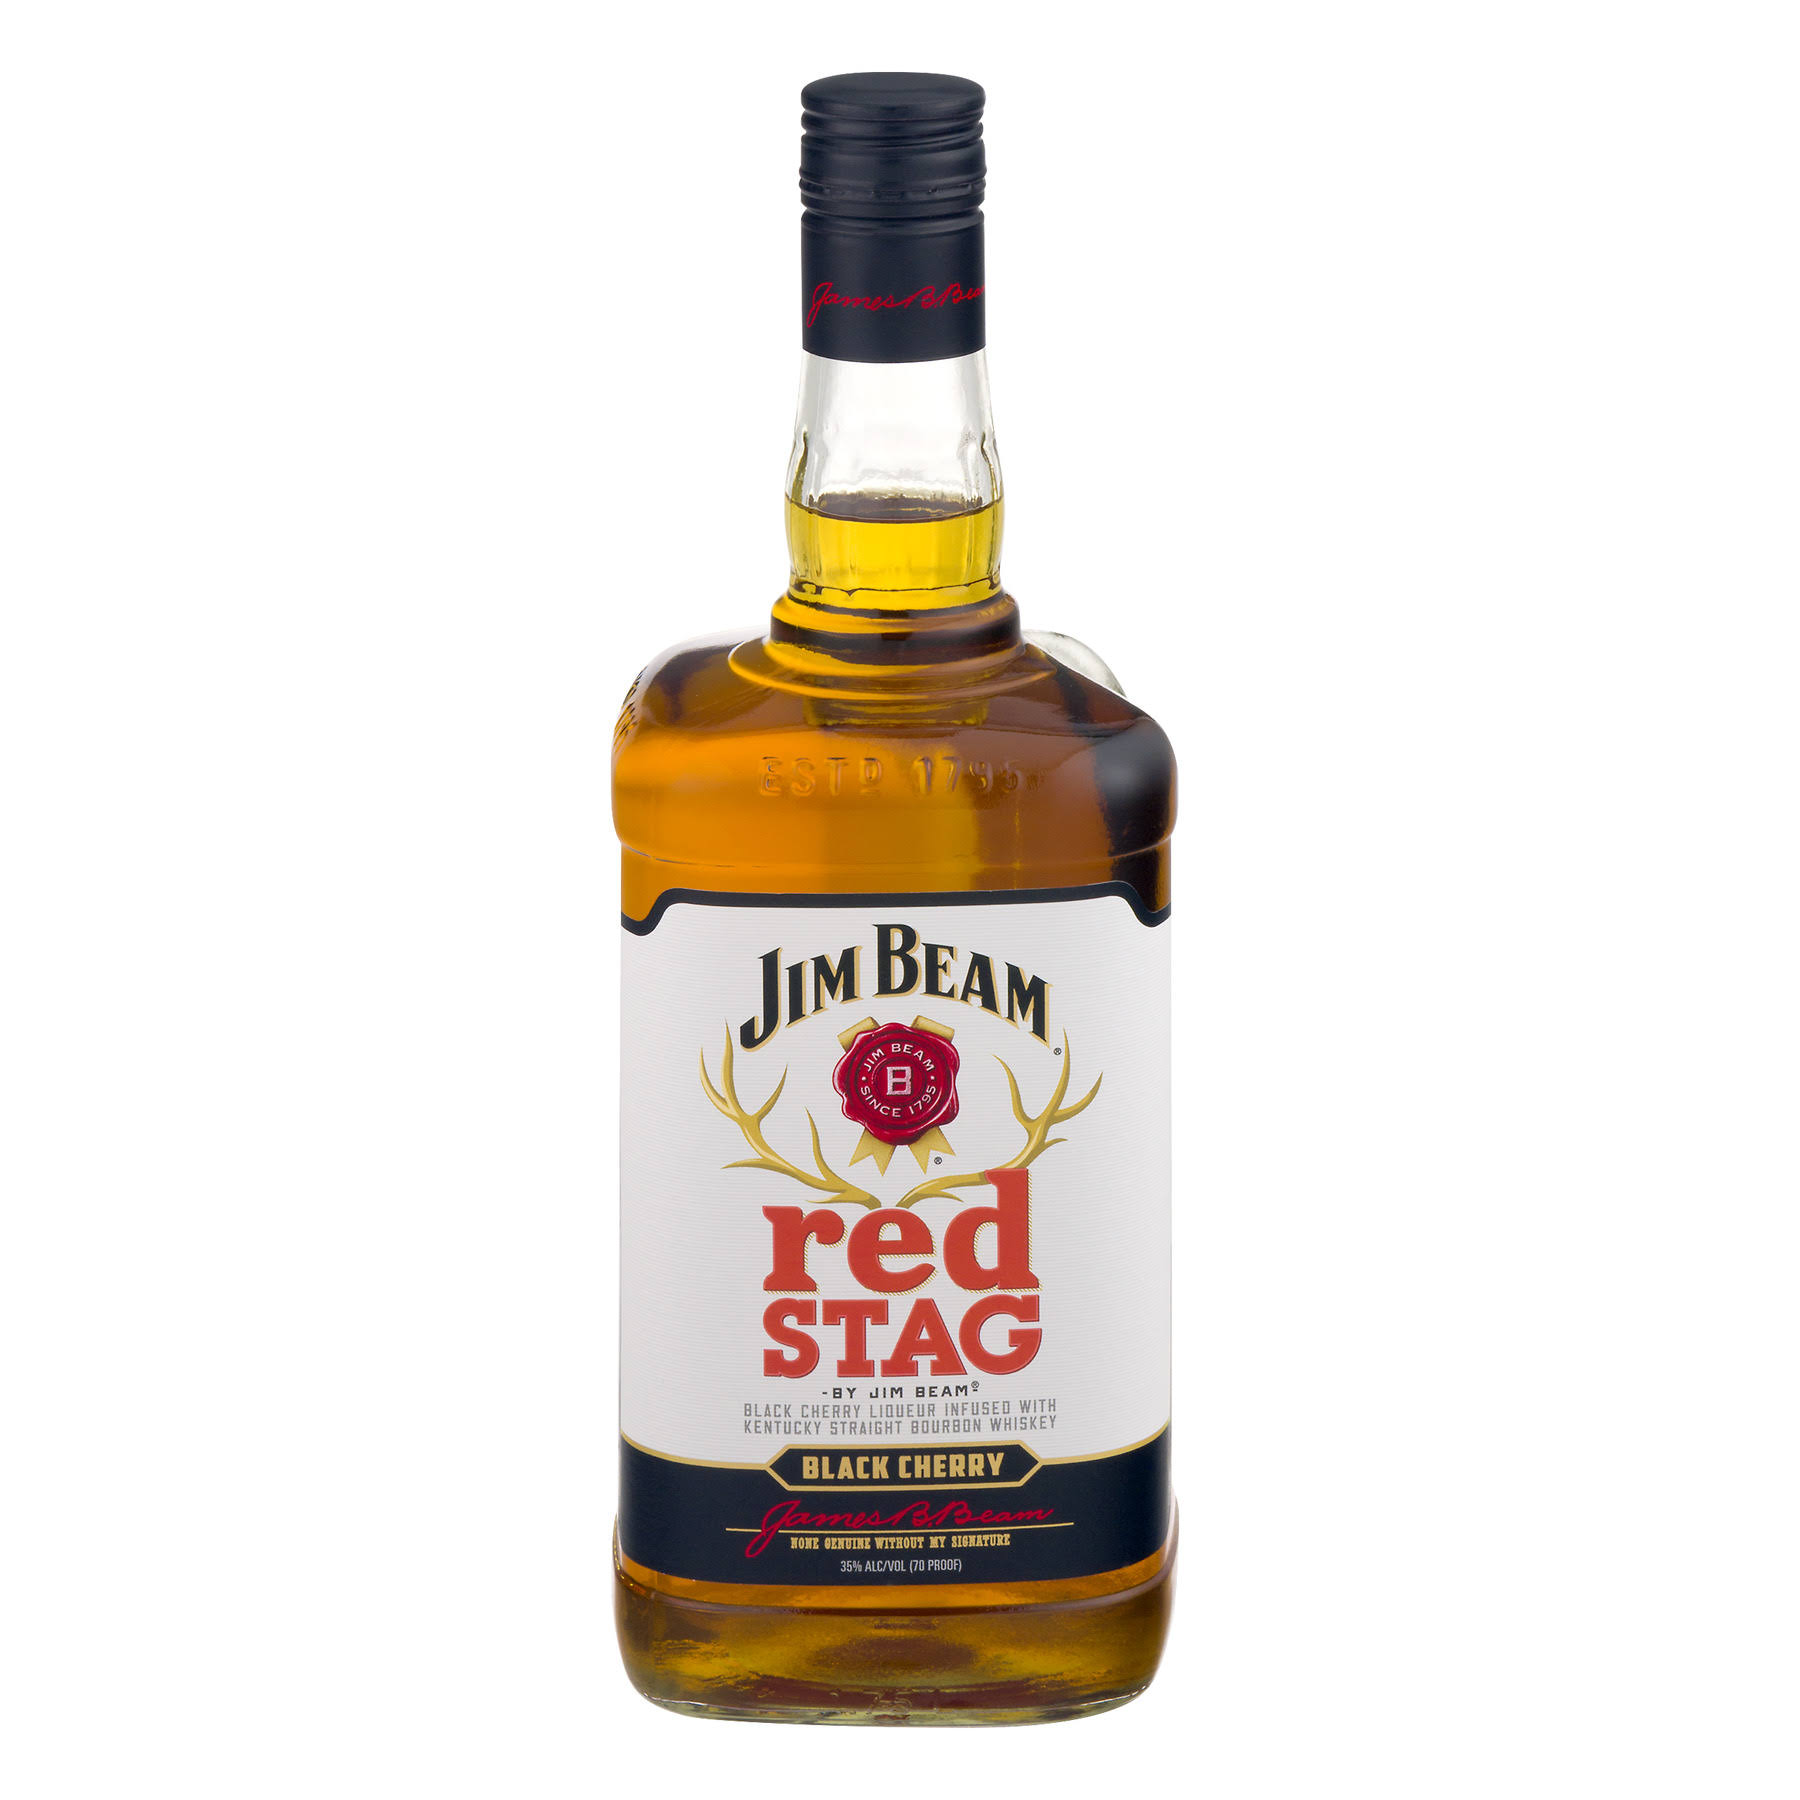 Jim Beam Red Stag Black Cherry Bourbon Whiskey - 1.75l